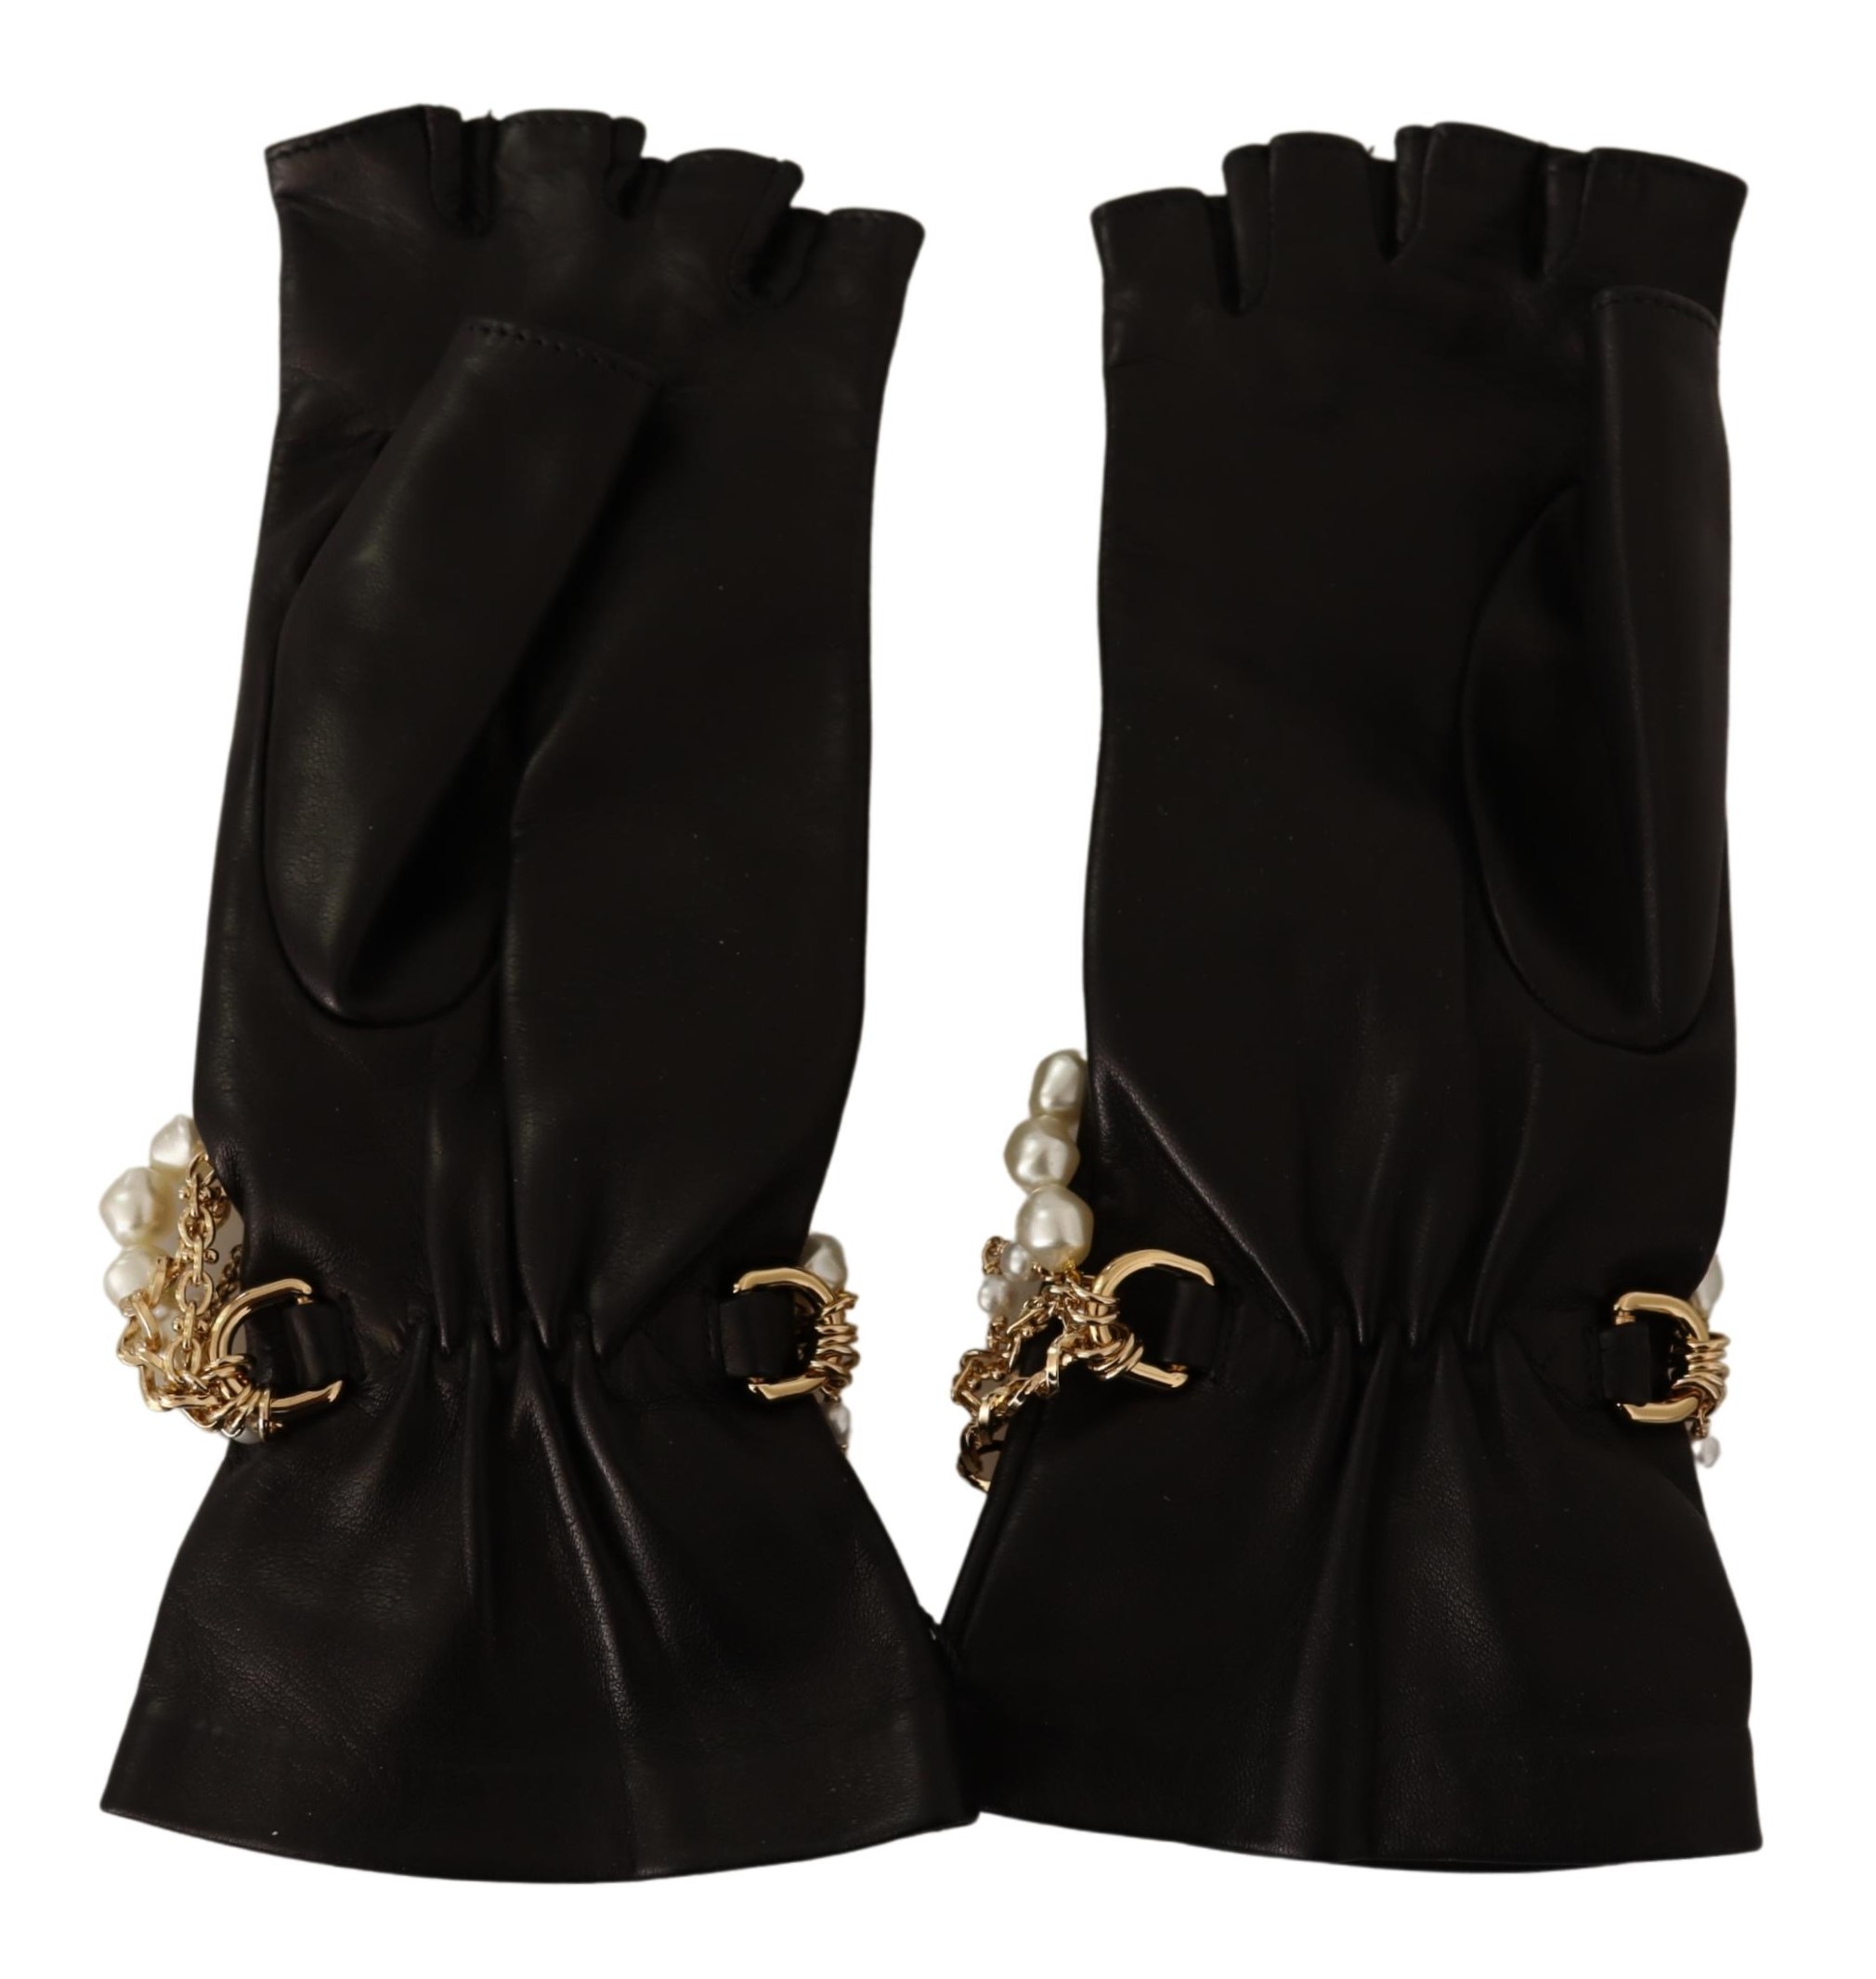 Dolce & Gabbana Black Leather Golden Chains Fingerless Gloves • Fashion Brands Outlet